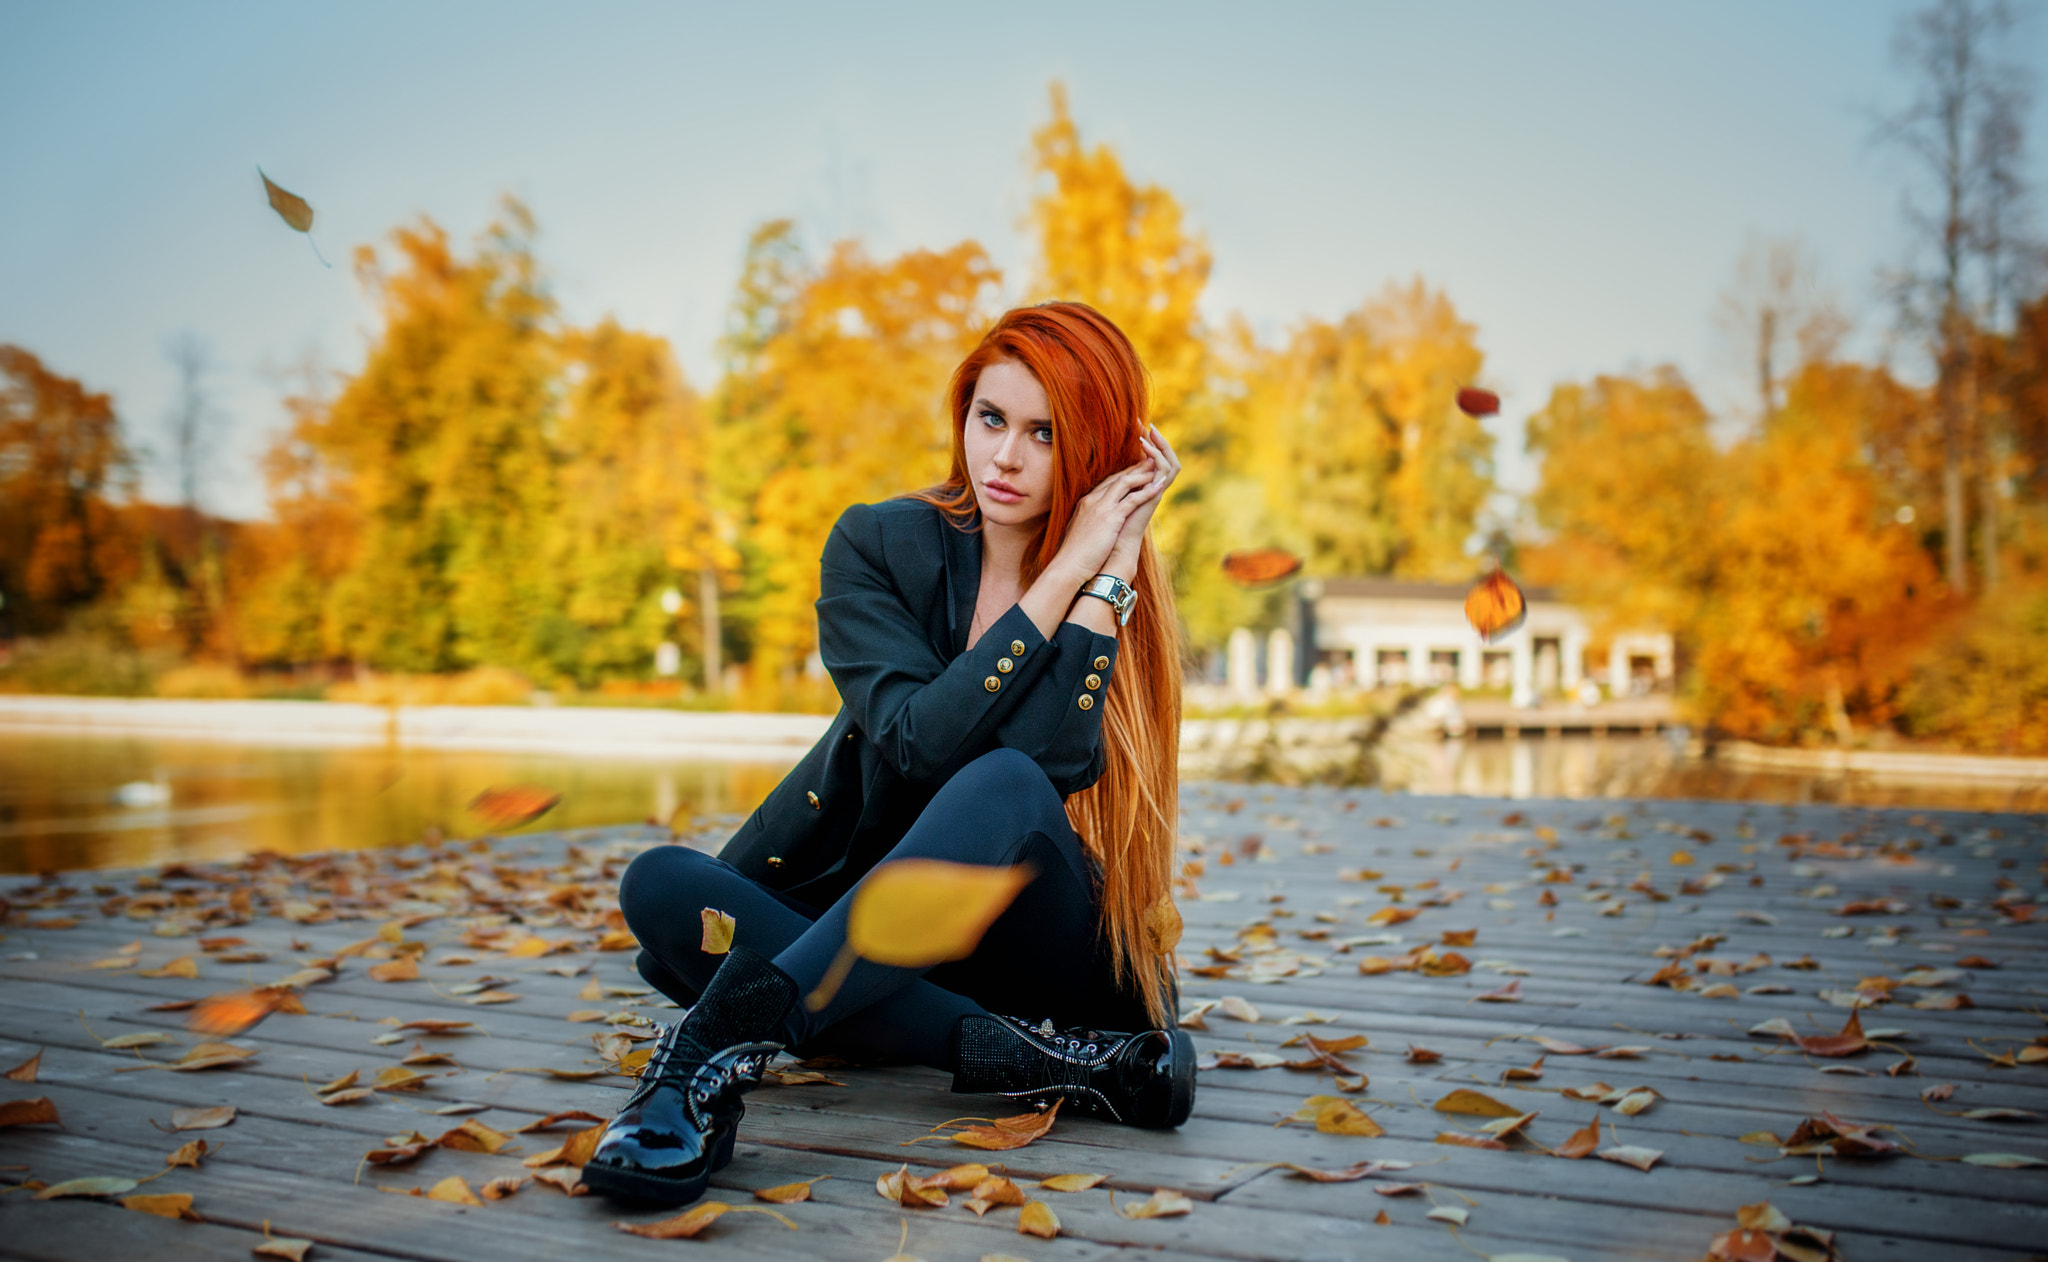 Women Dana Bounty Redhead Sitting Long Hair Leaves Black Clothing Wooden Surface Women Outdoors 2048x1262